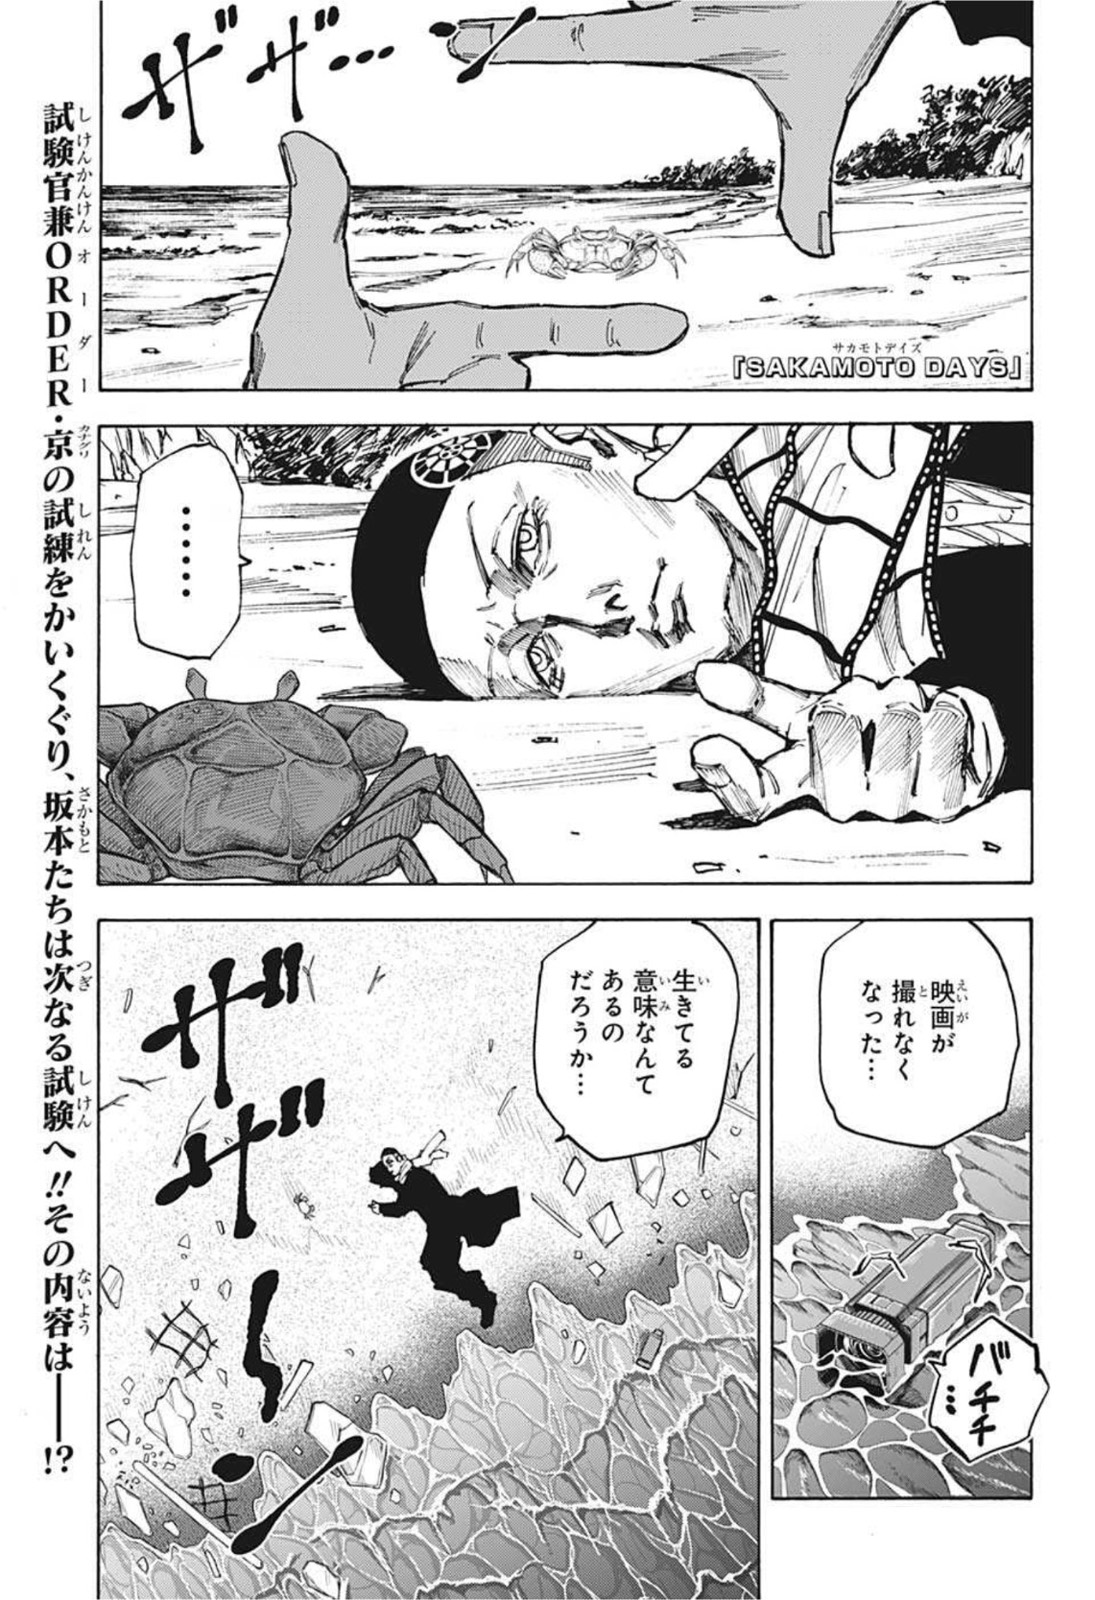 SAKAMOTO-サカモト- 第62話 - Page 1